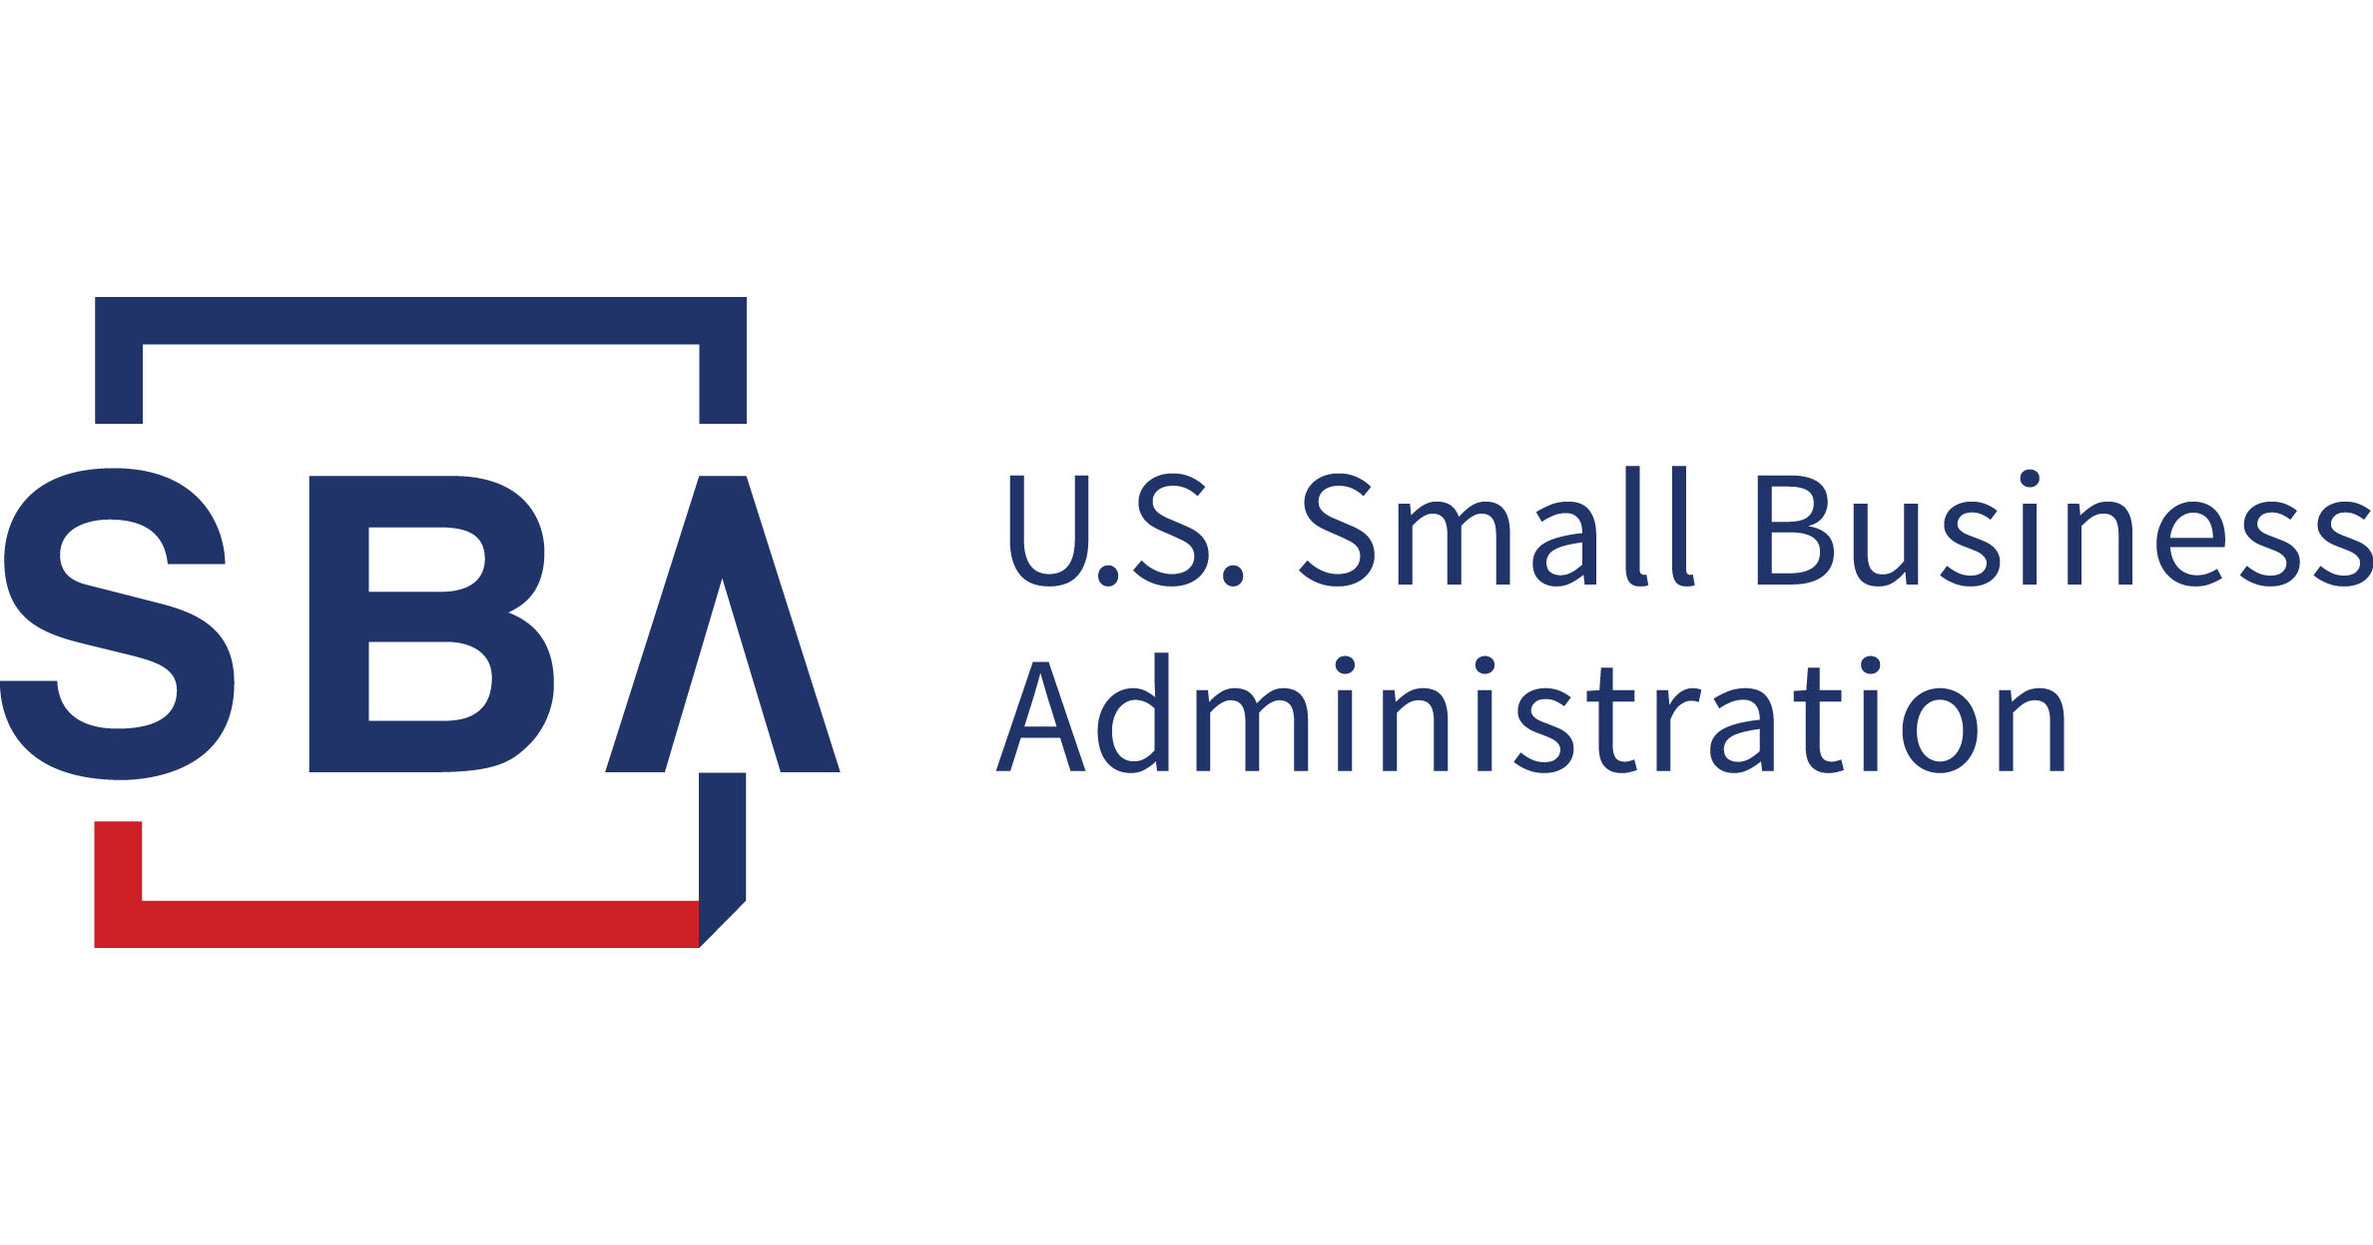 SBA Logo + U.S. Small Business Adminstration